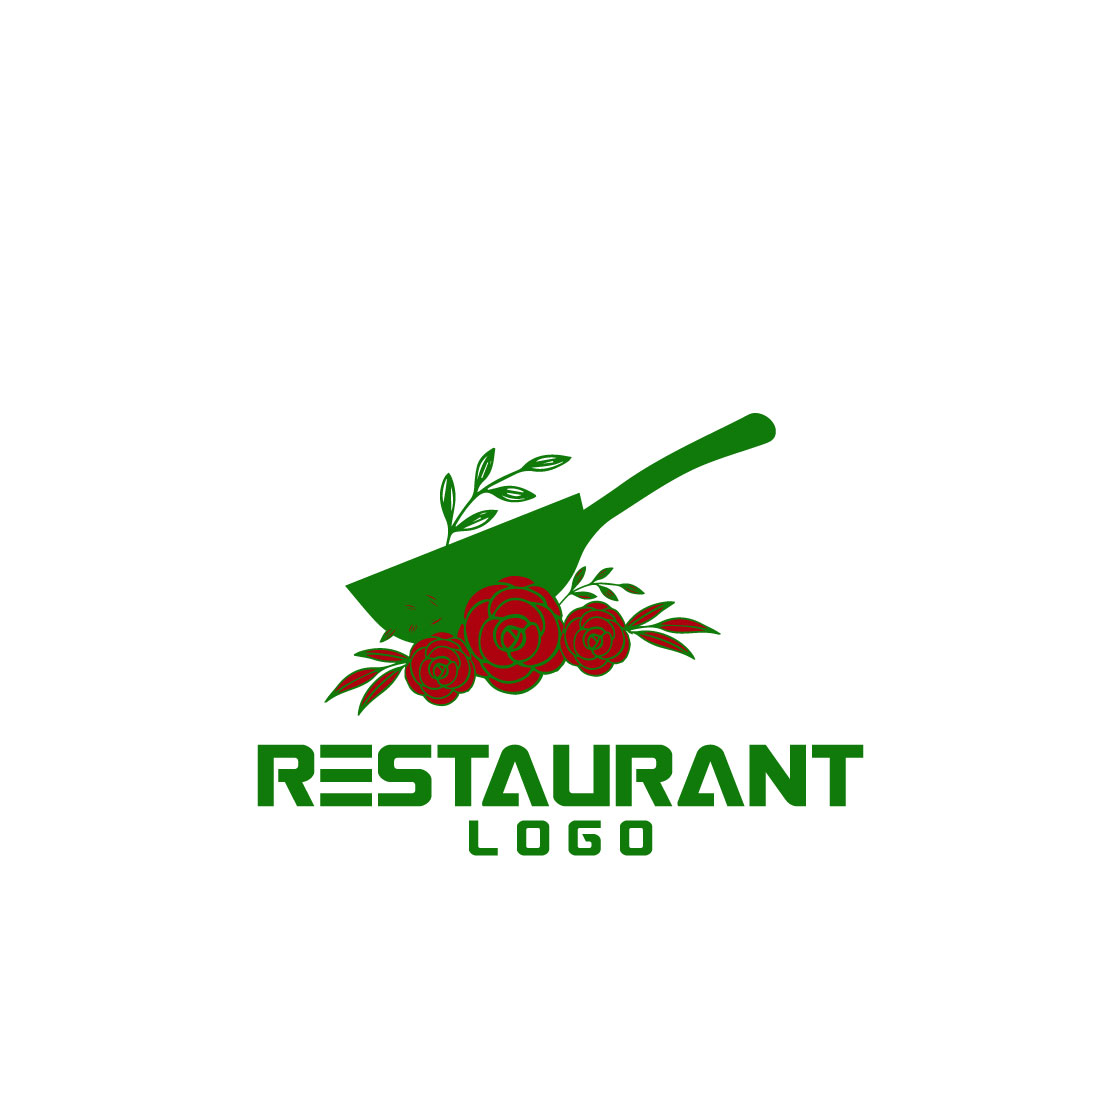 Free Kitchen Magic Logo preview image.